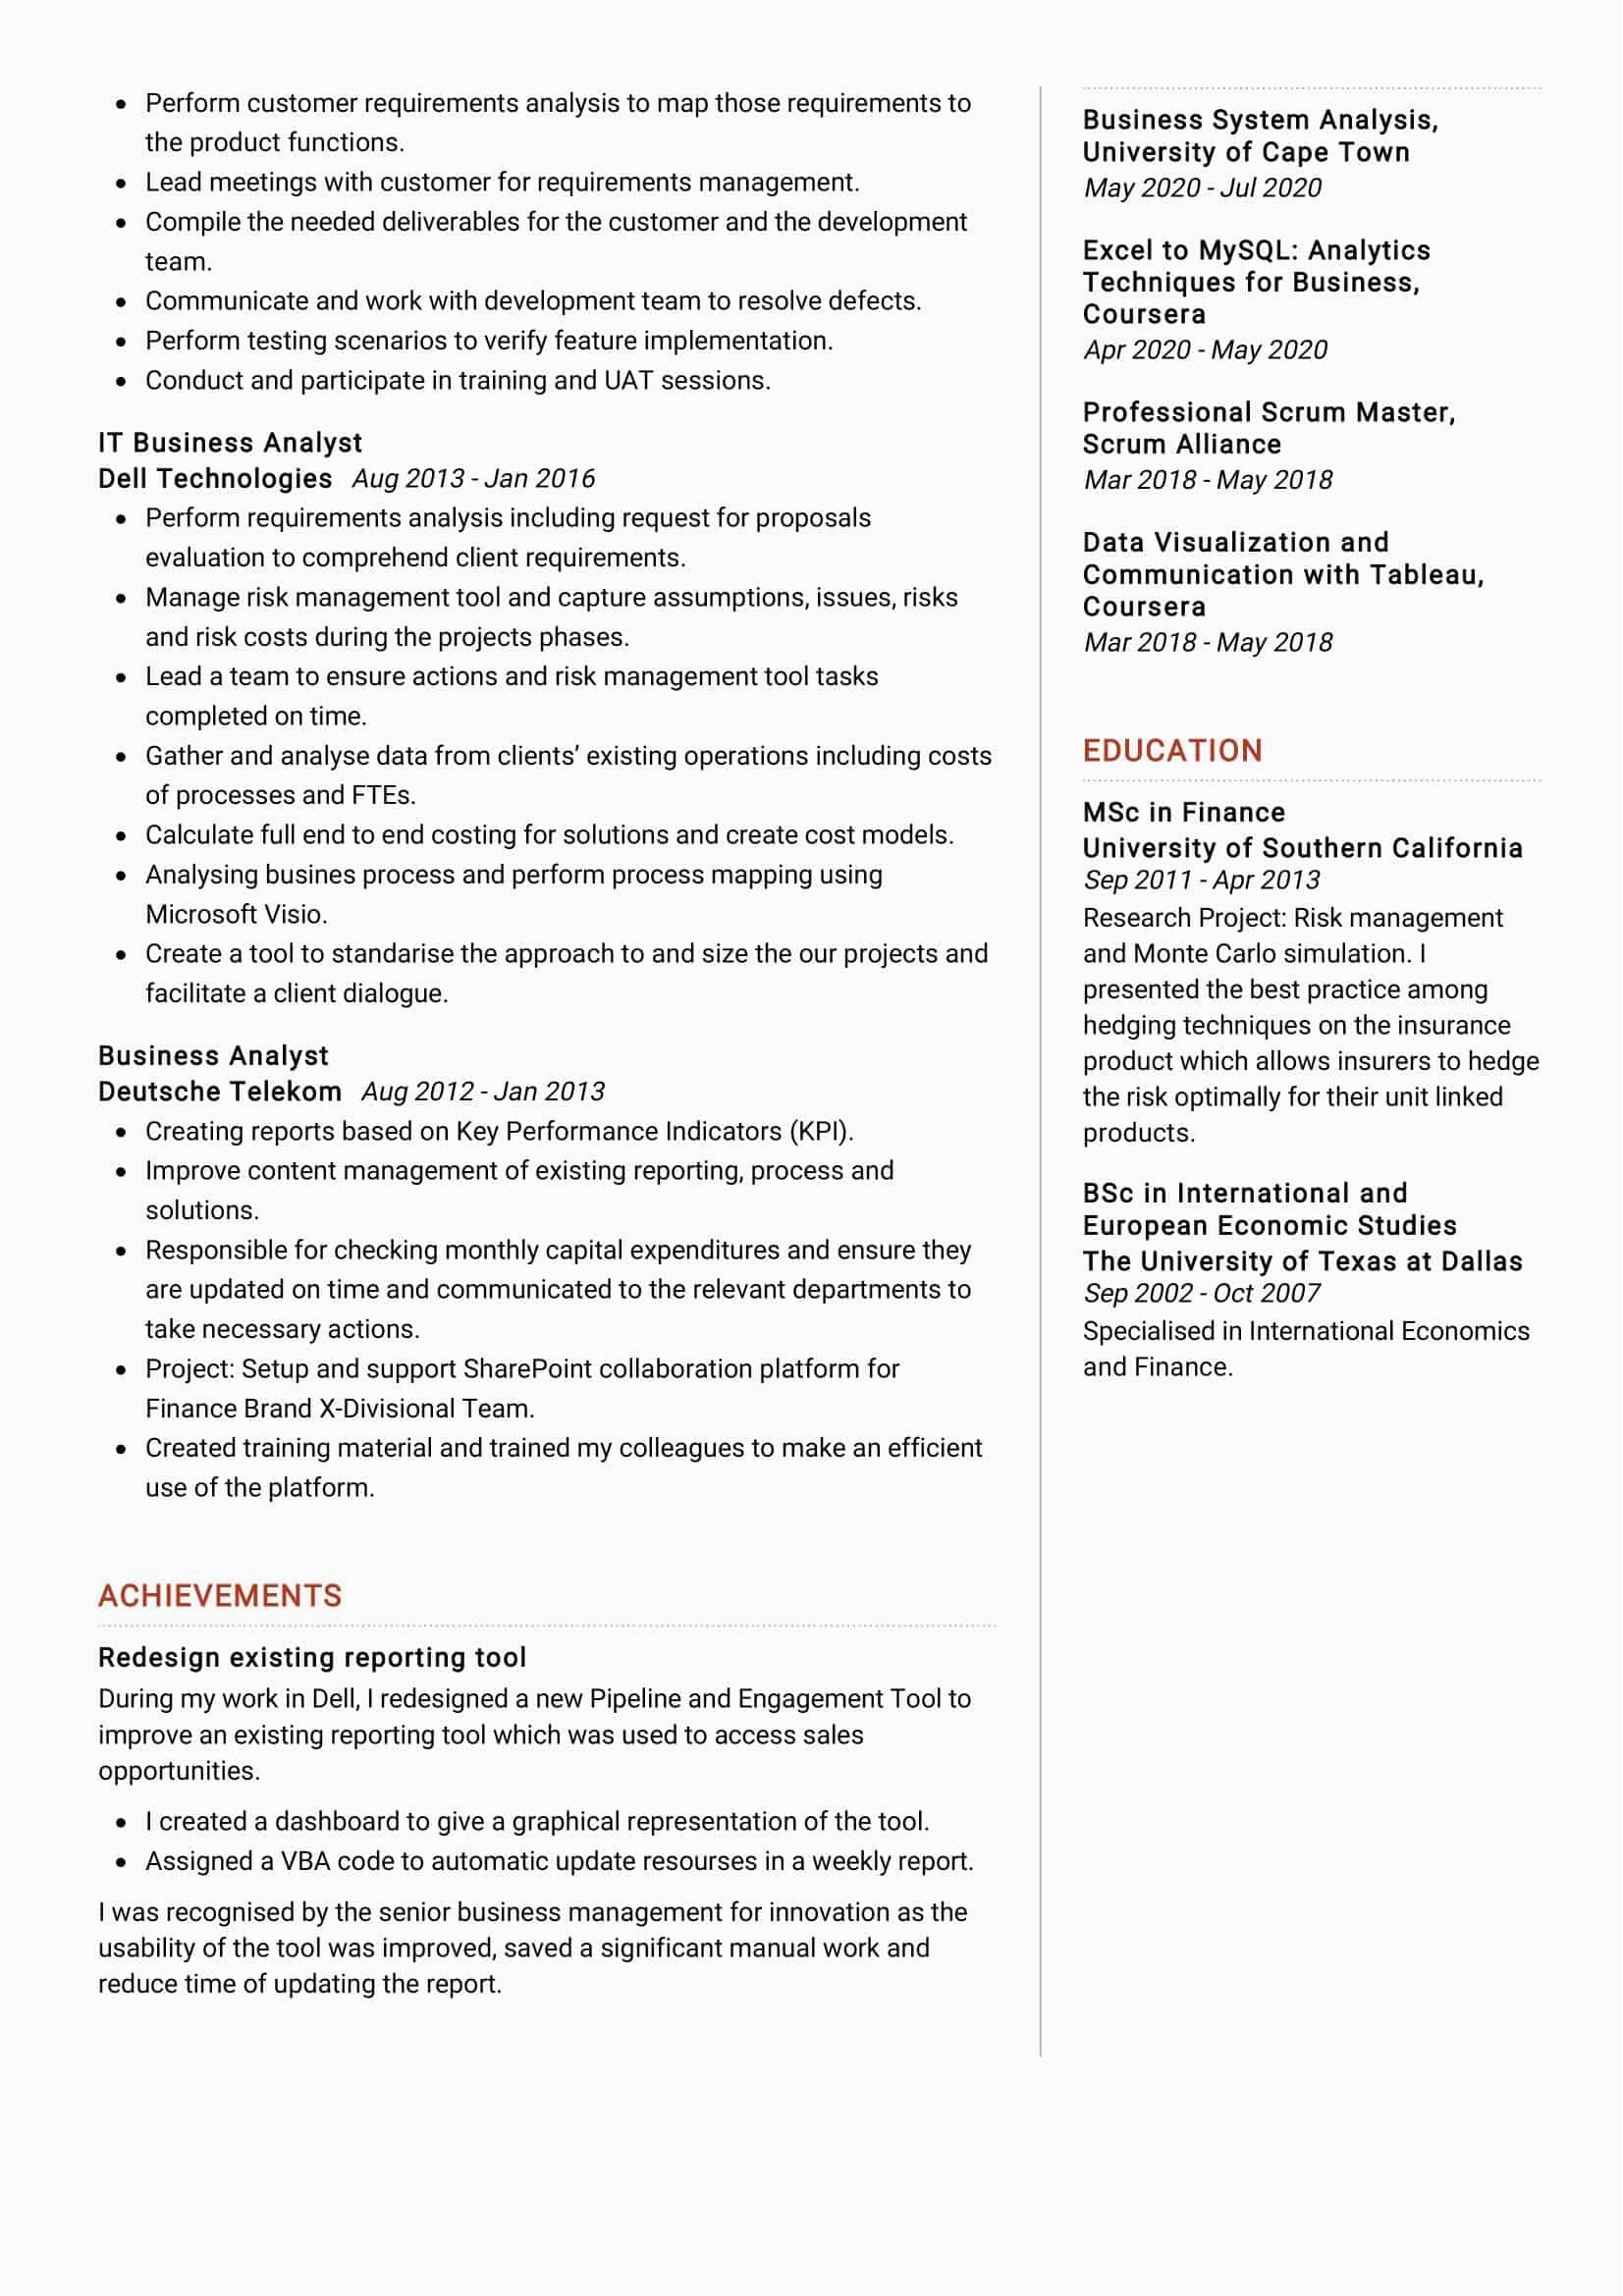 Junior Ba Resume Sample for It бЛогът на младия мениджър [44 ] Cv Template for Agile Business Analyst